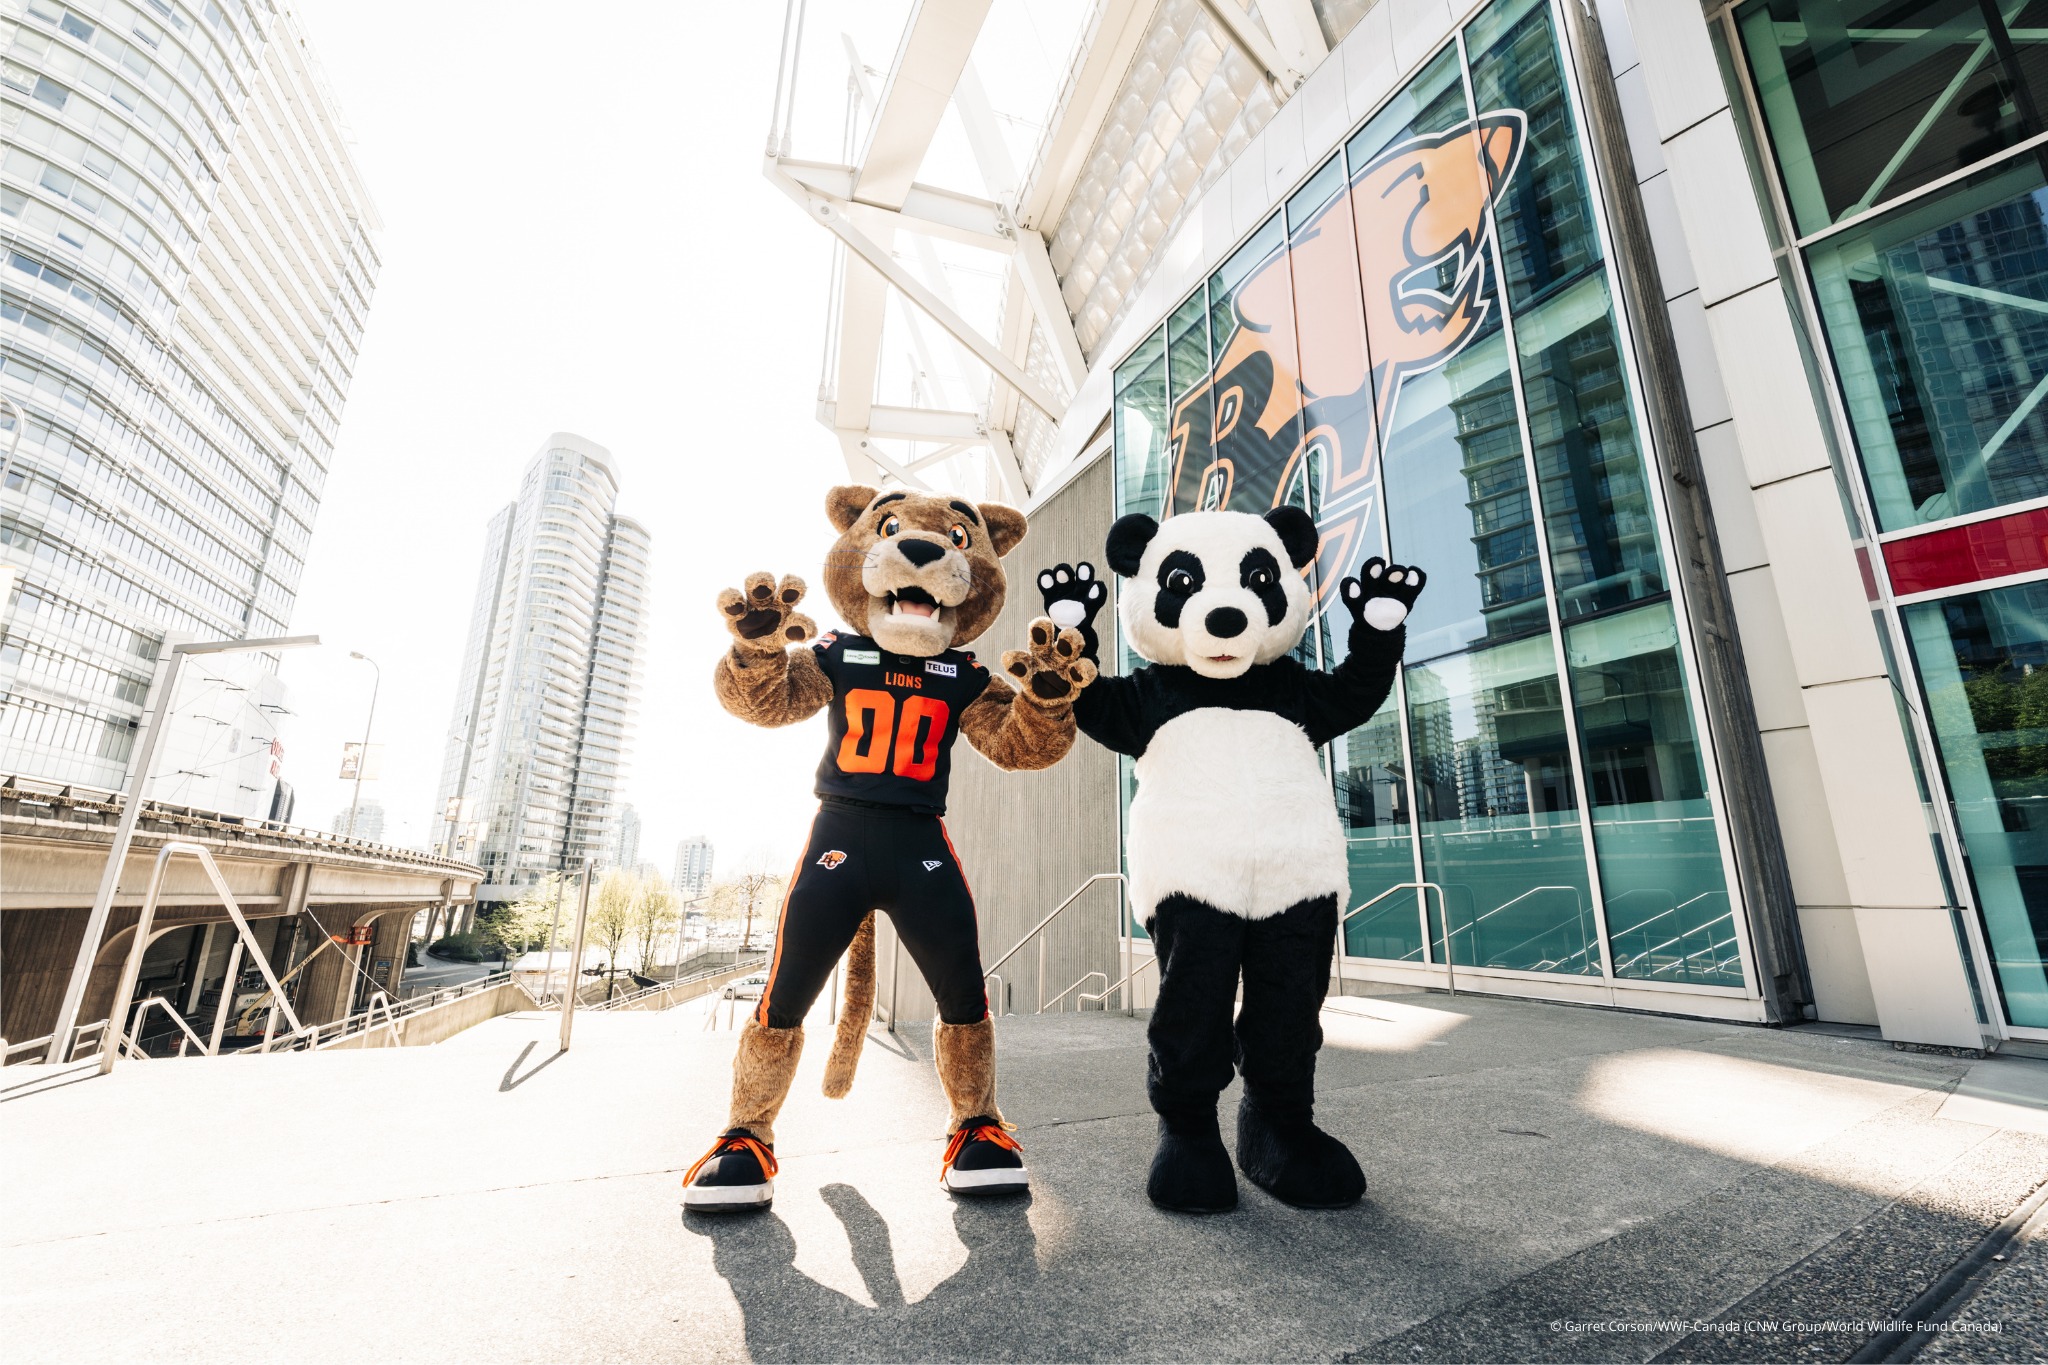 WWF's panda mascot races the BC Lions' mascot Leo at BC Place